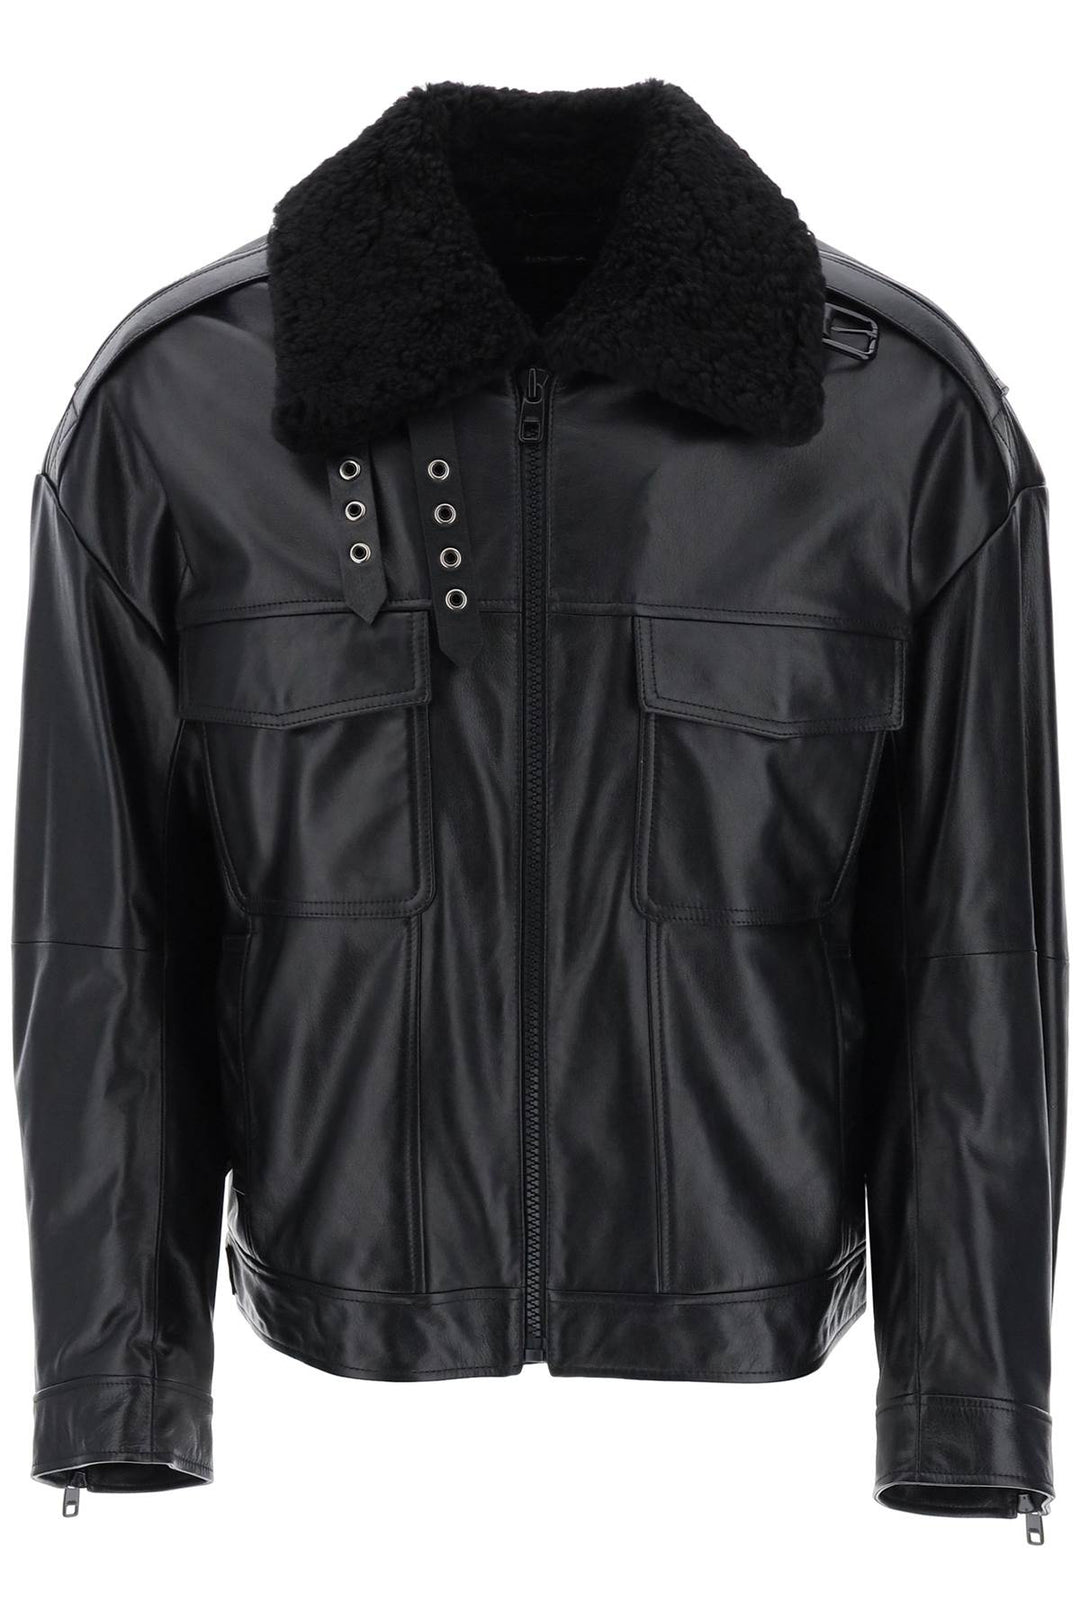 Dolce & Gabbana Leather And Fur Biker Jacket   Nero